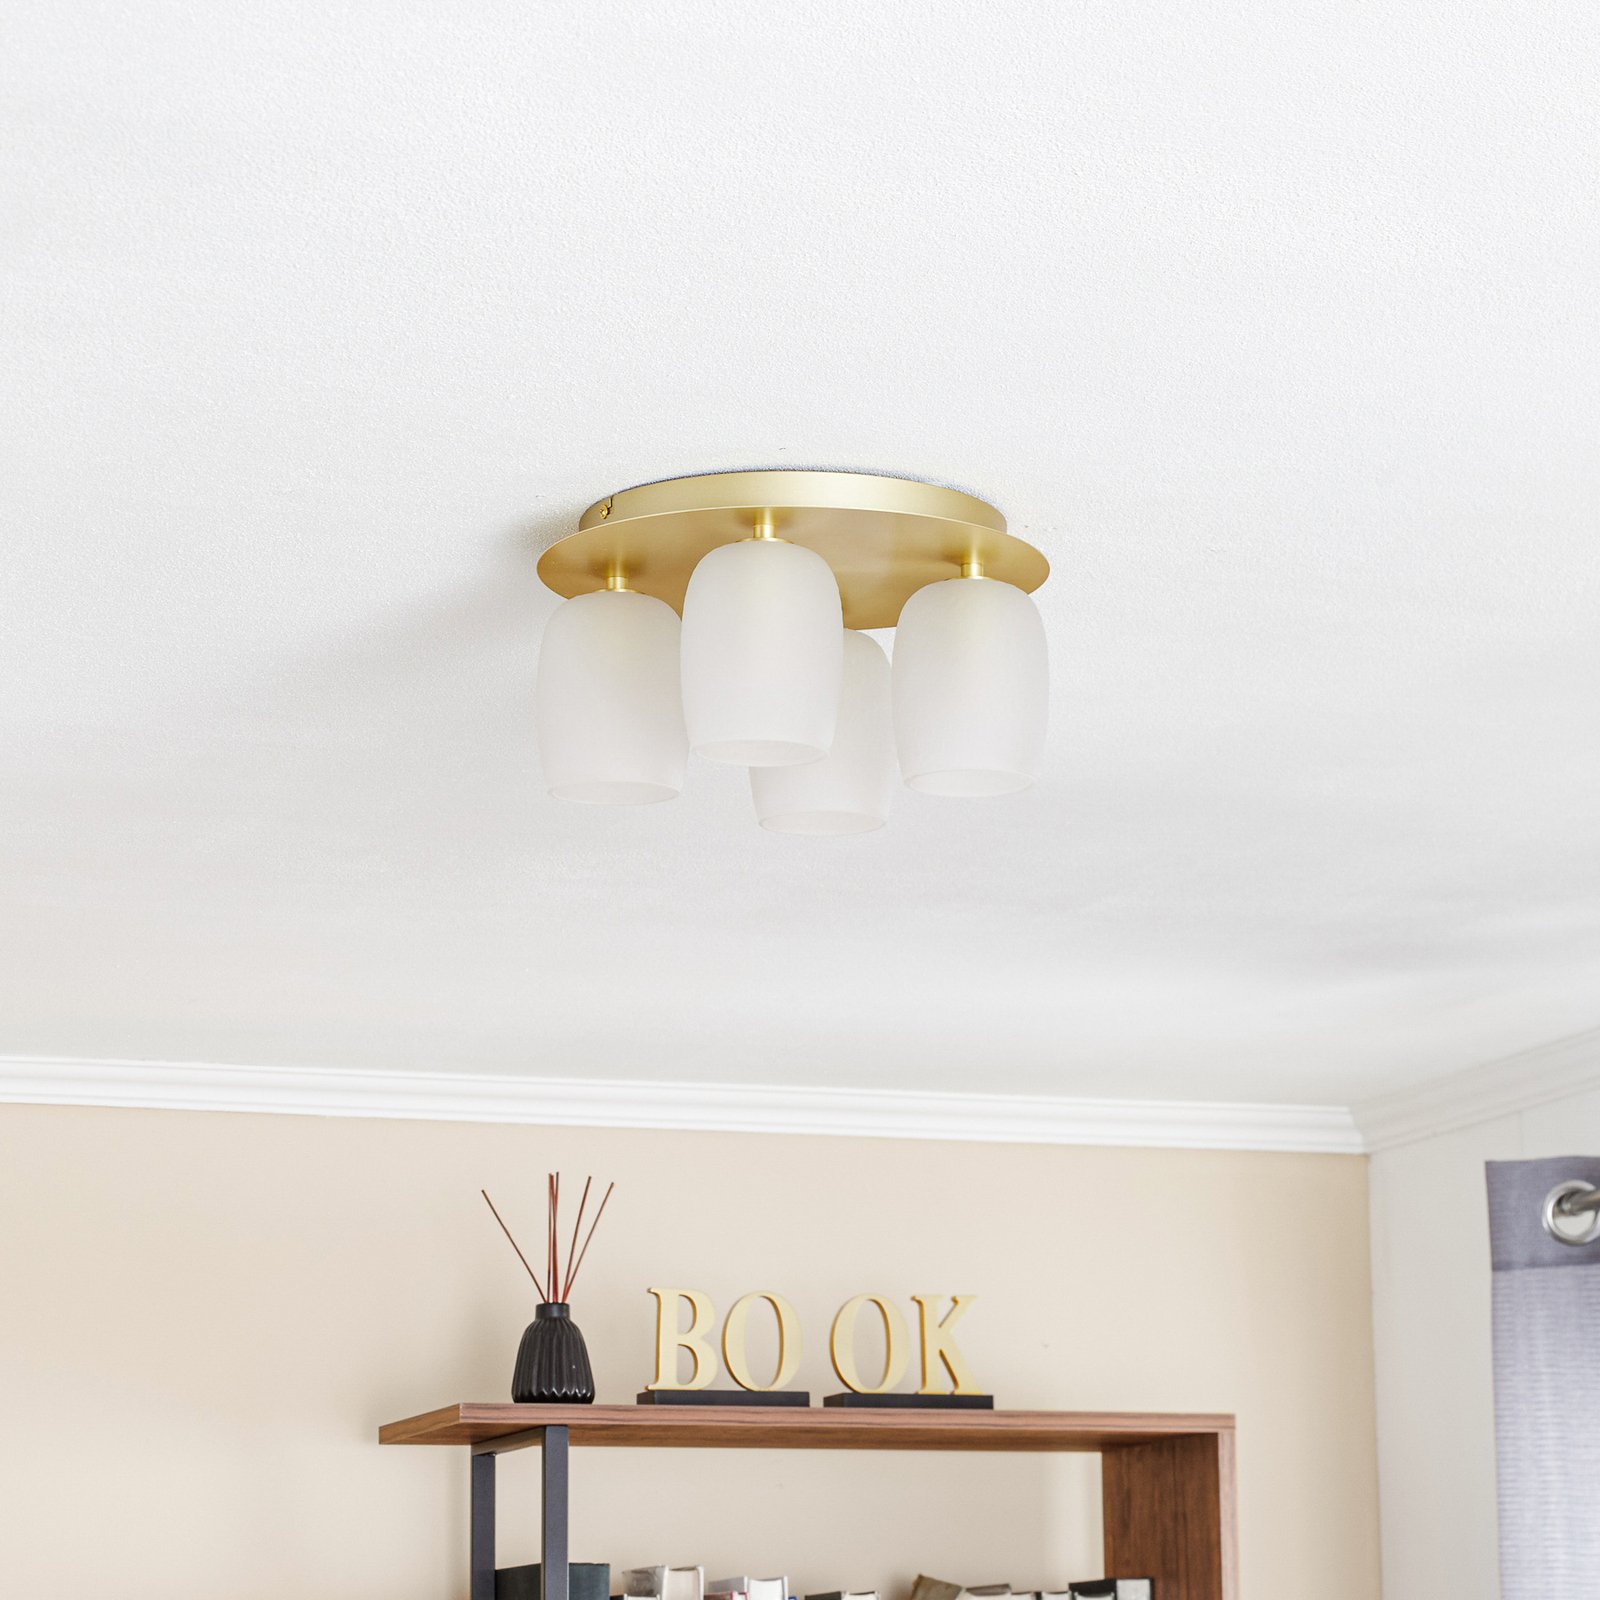 Lucande Taylan ceiling light 4-bulb circular